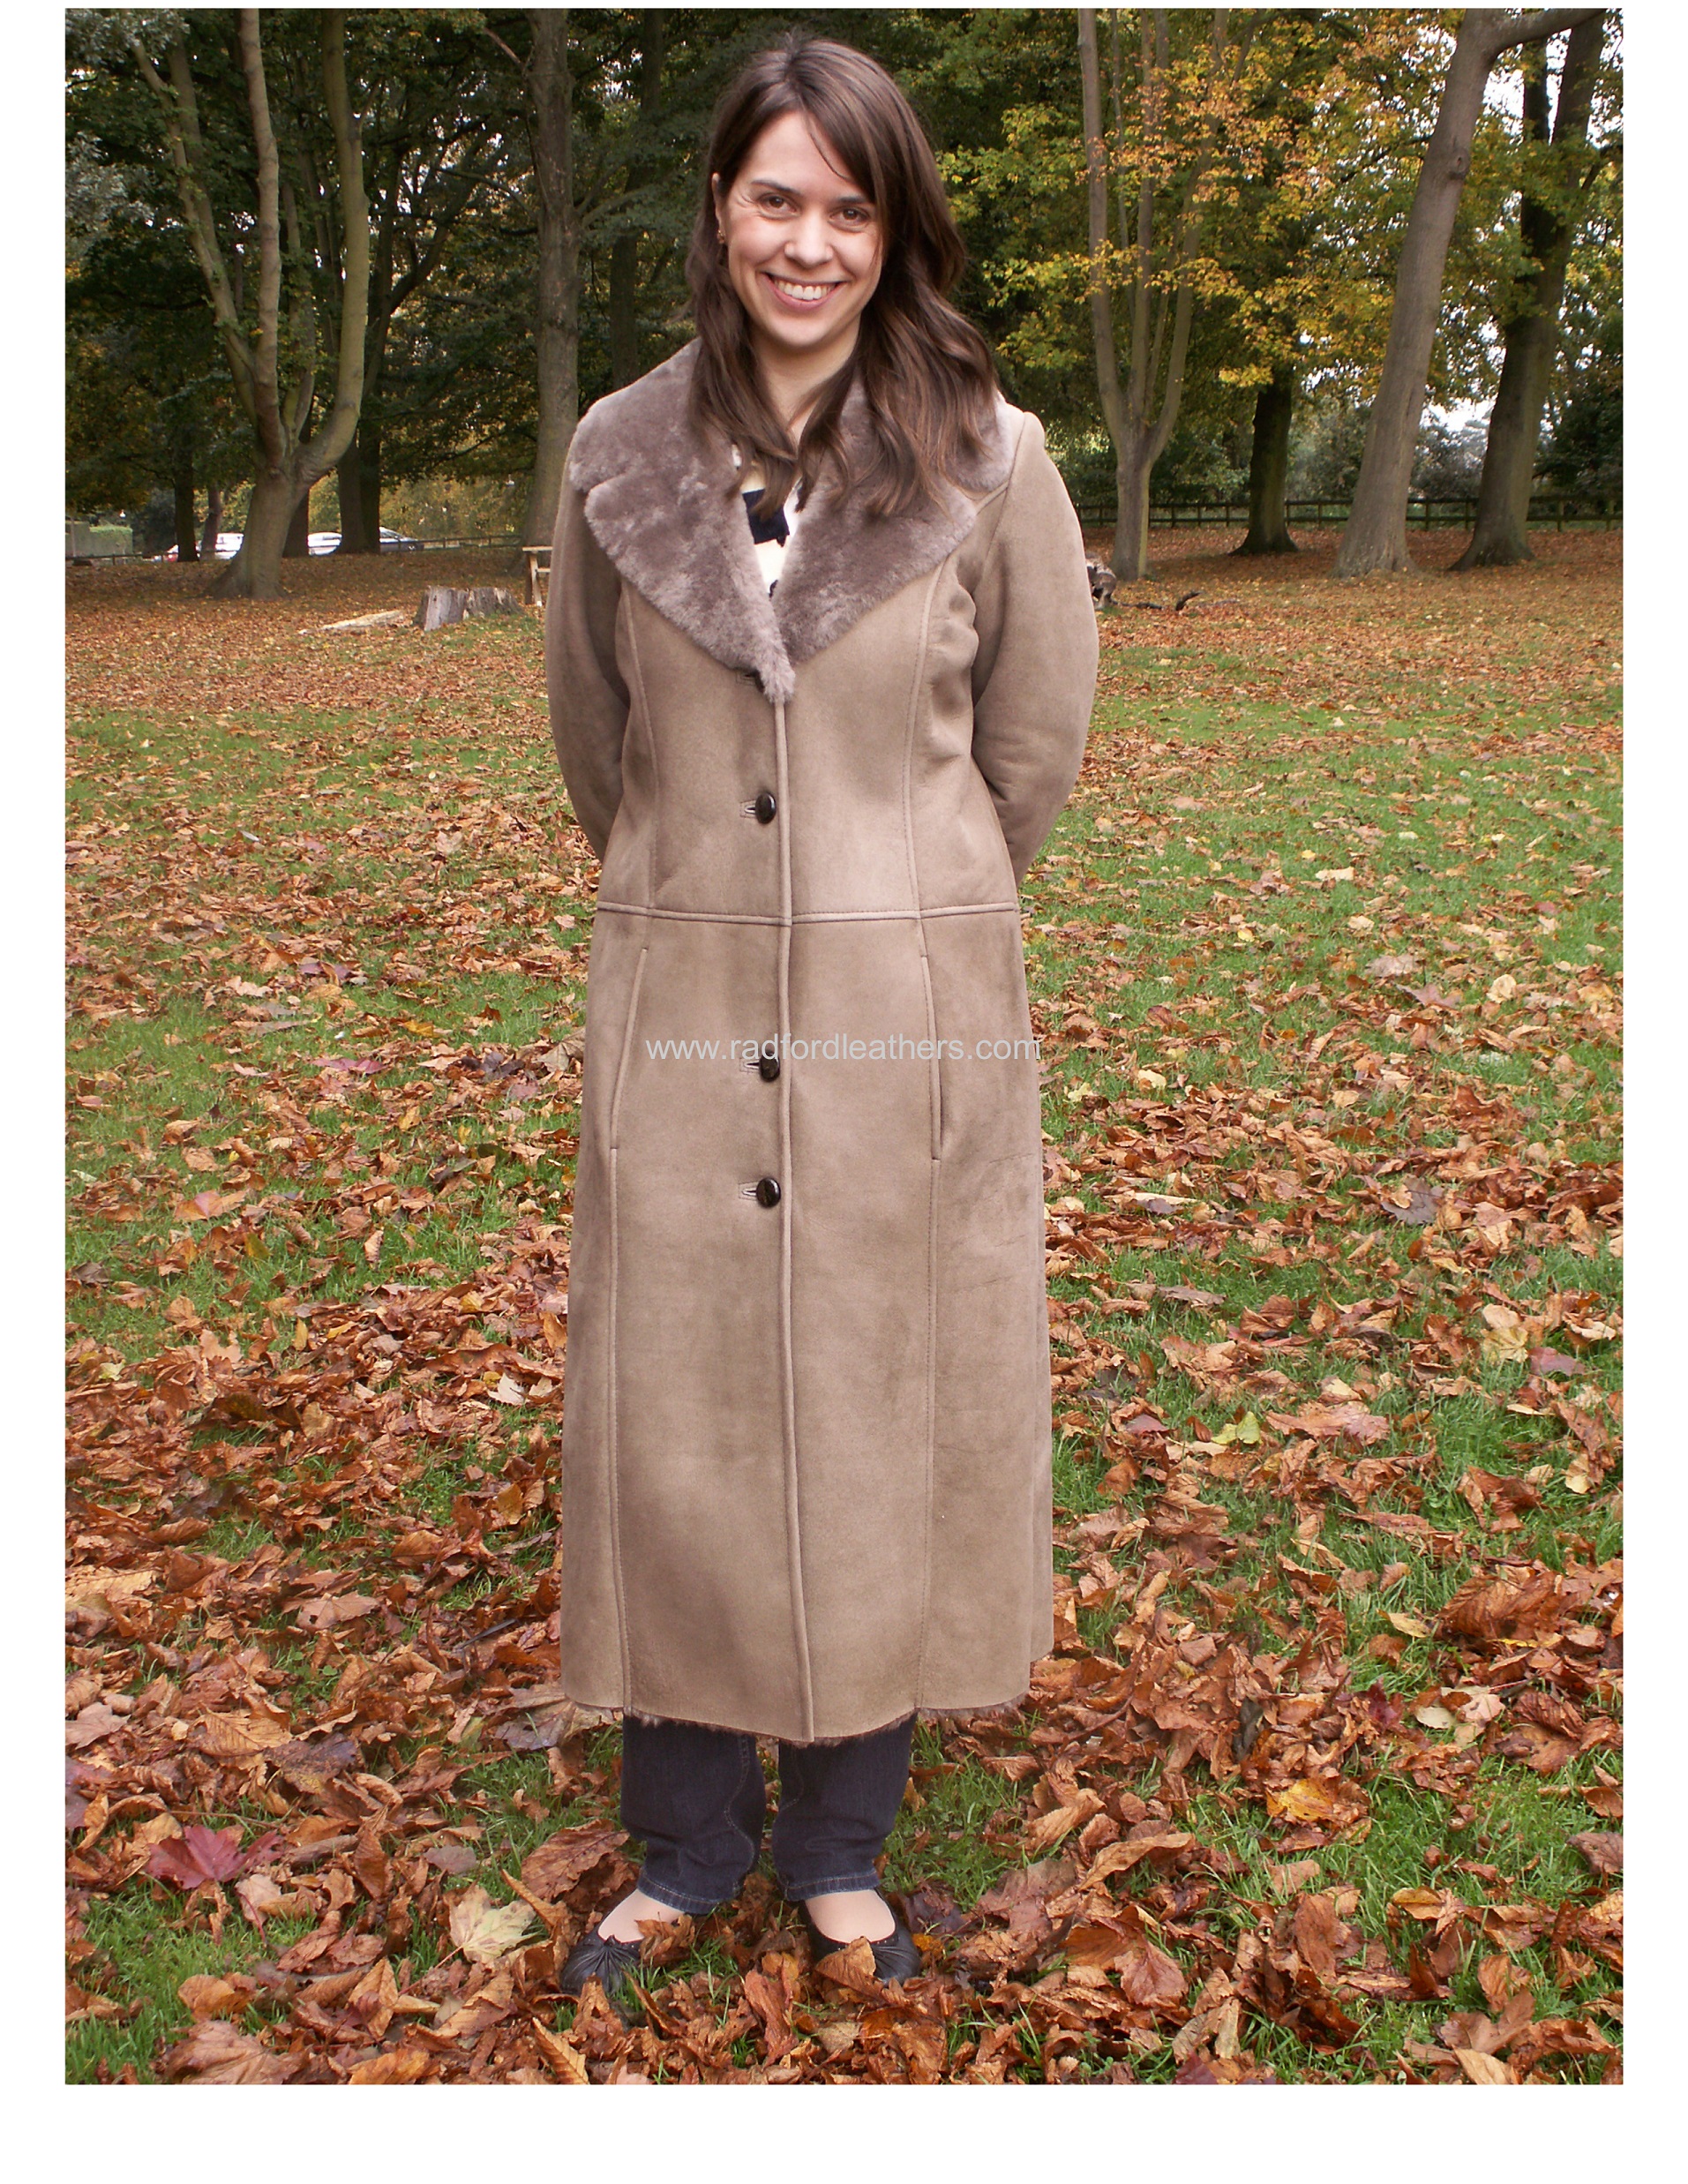 Women's sheepskin coats uk – Modern fashion jacket photo blog